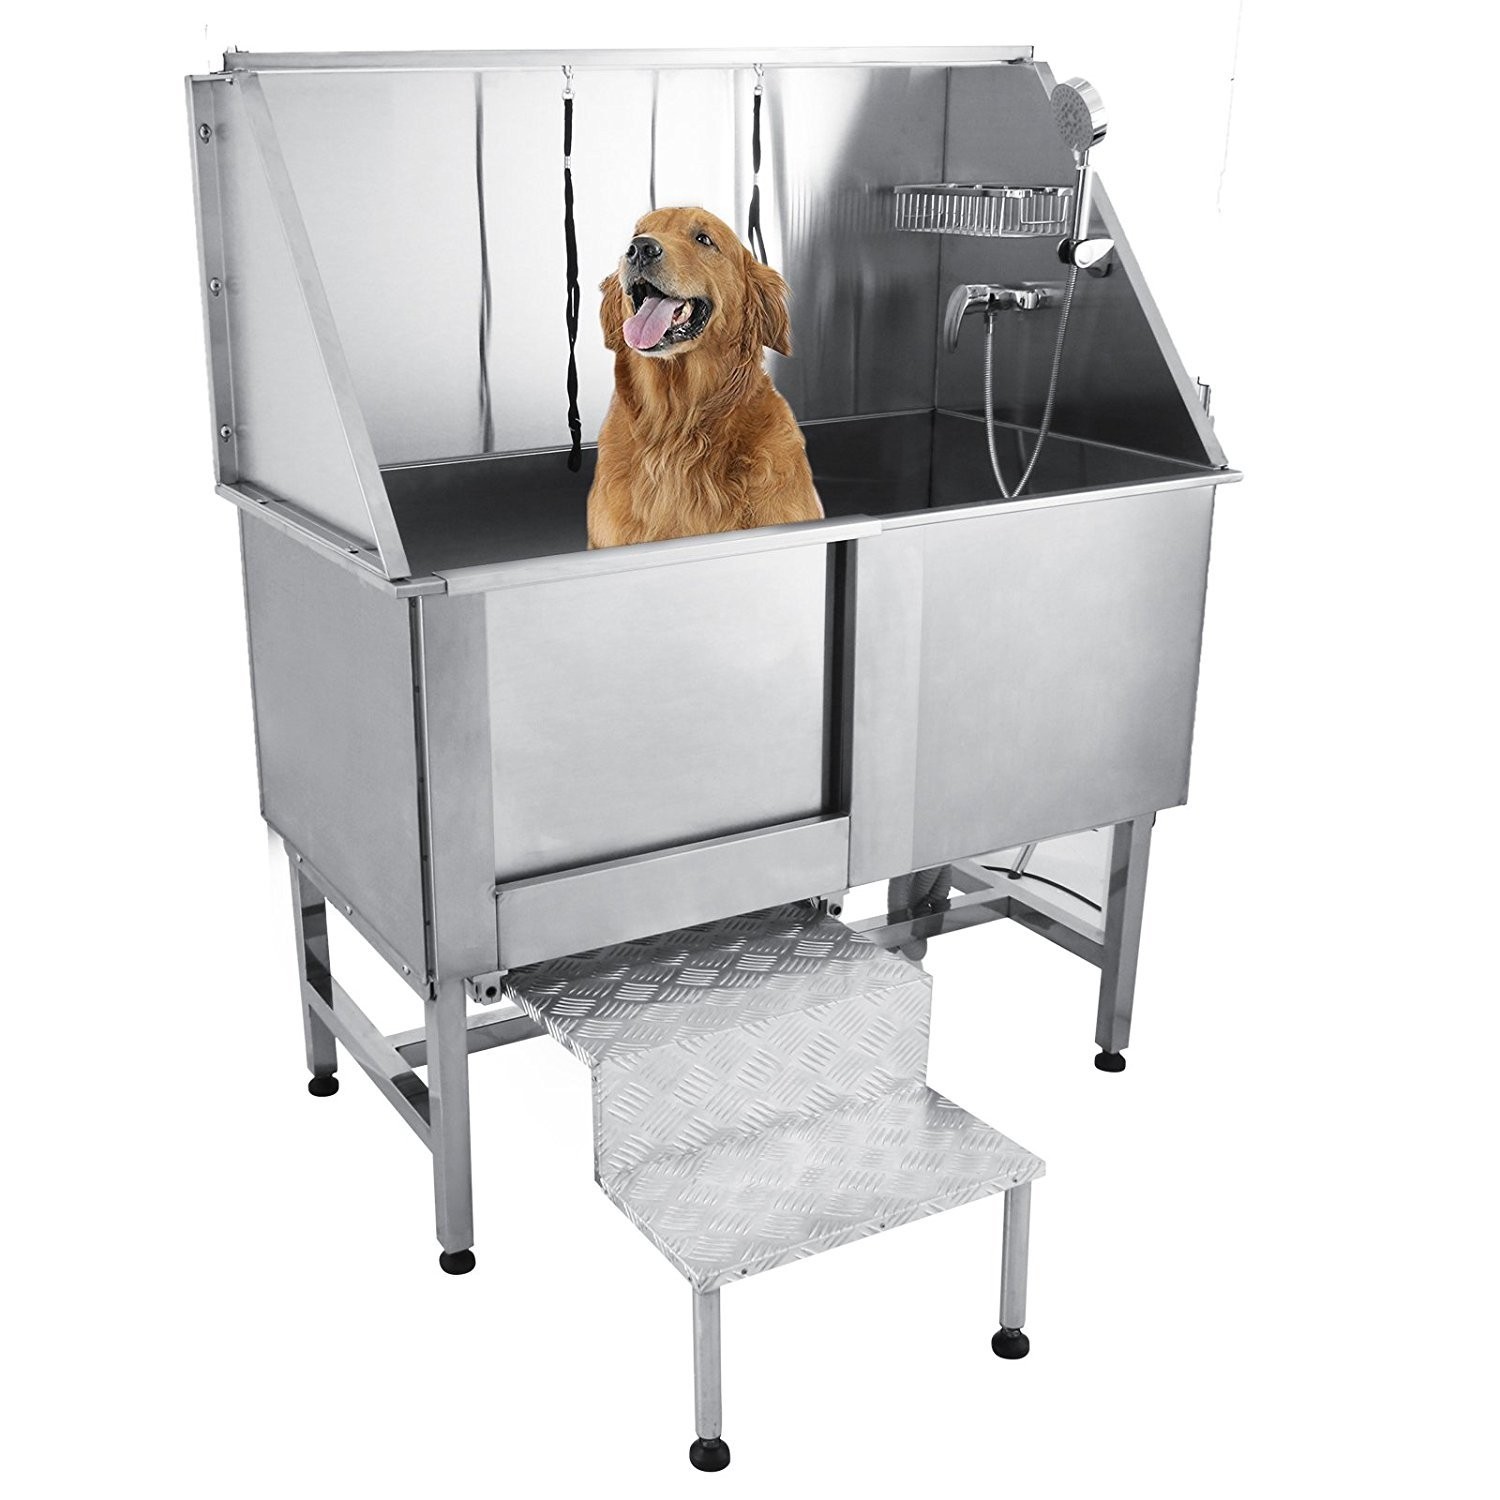 Professional Pet Dog Grooming Tub